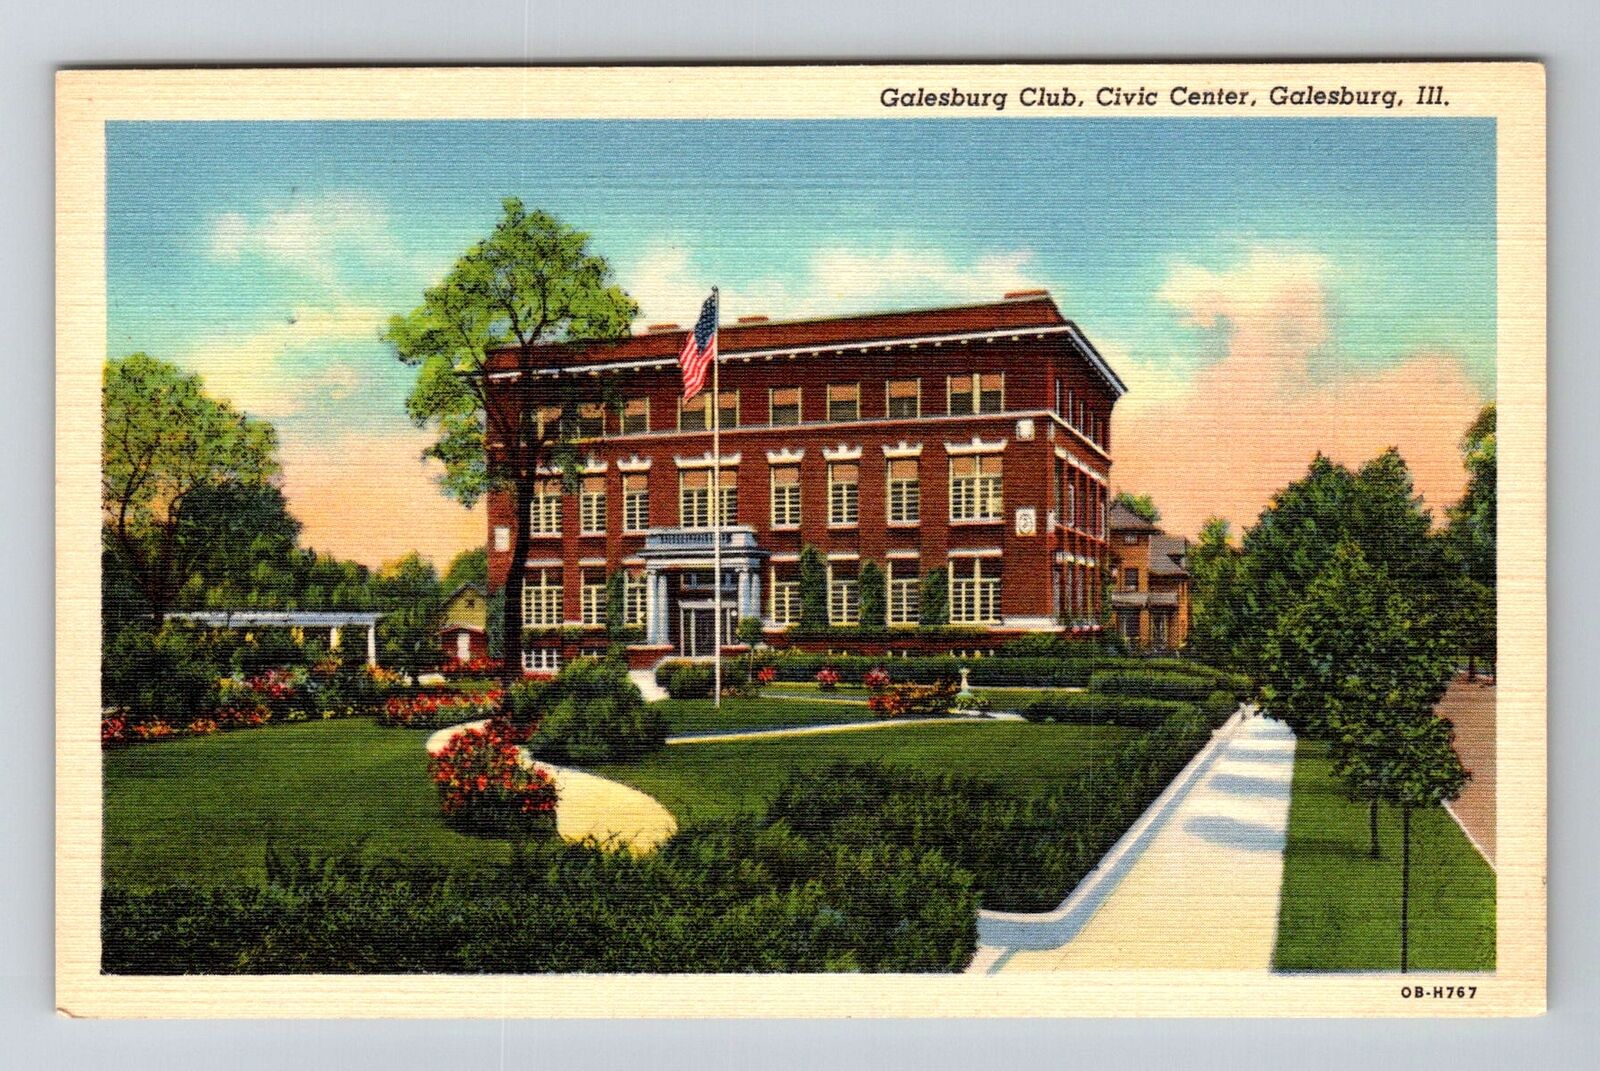 Galesburg, IL-Illinois, Galesburg Club Civic Center Antique, Vintage Postcard